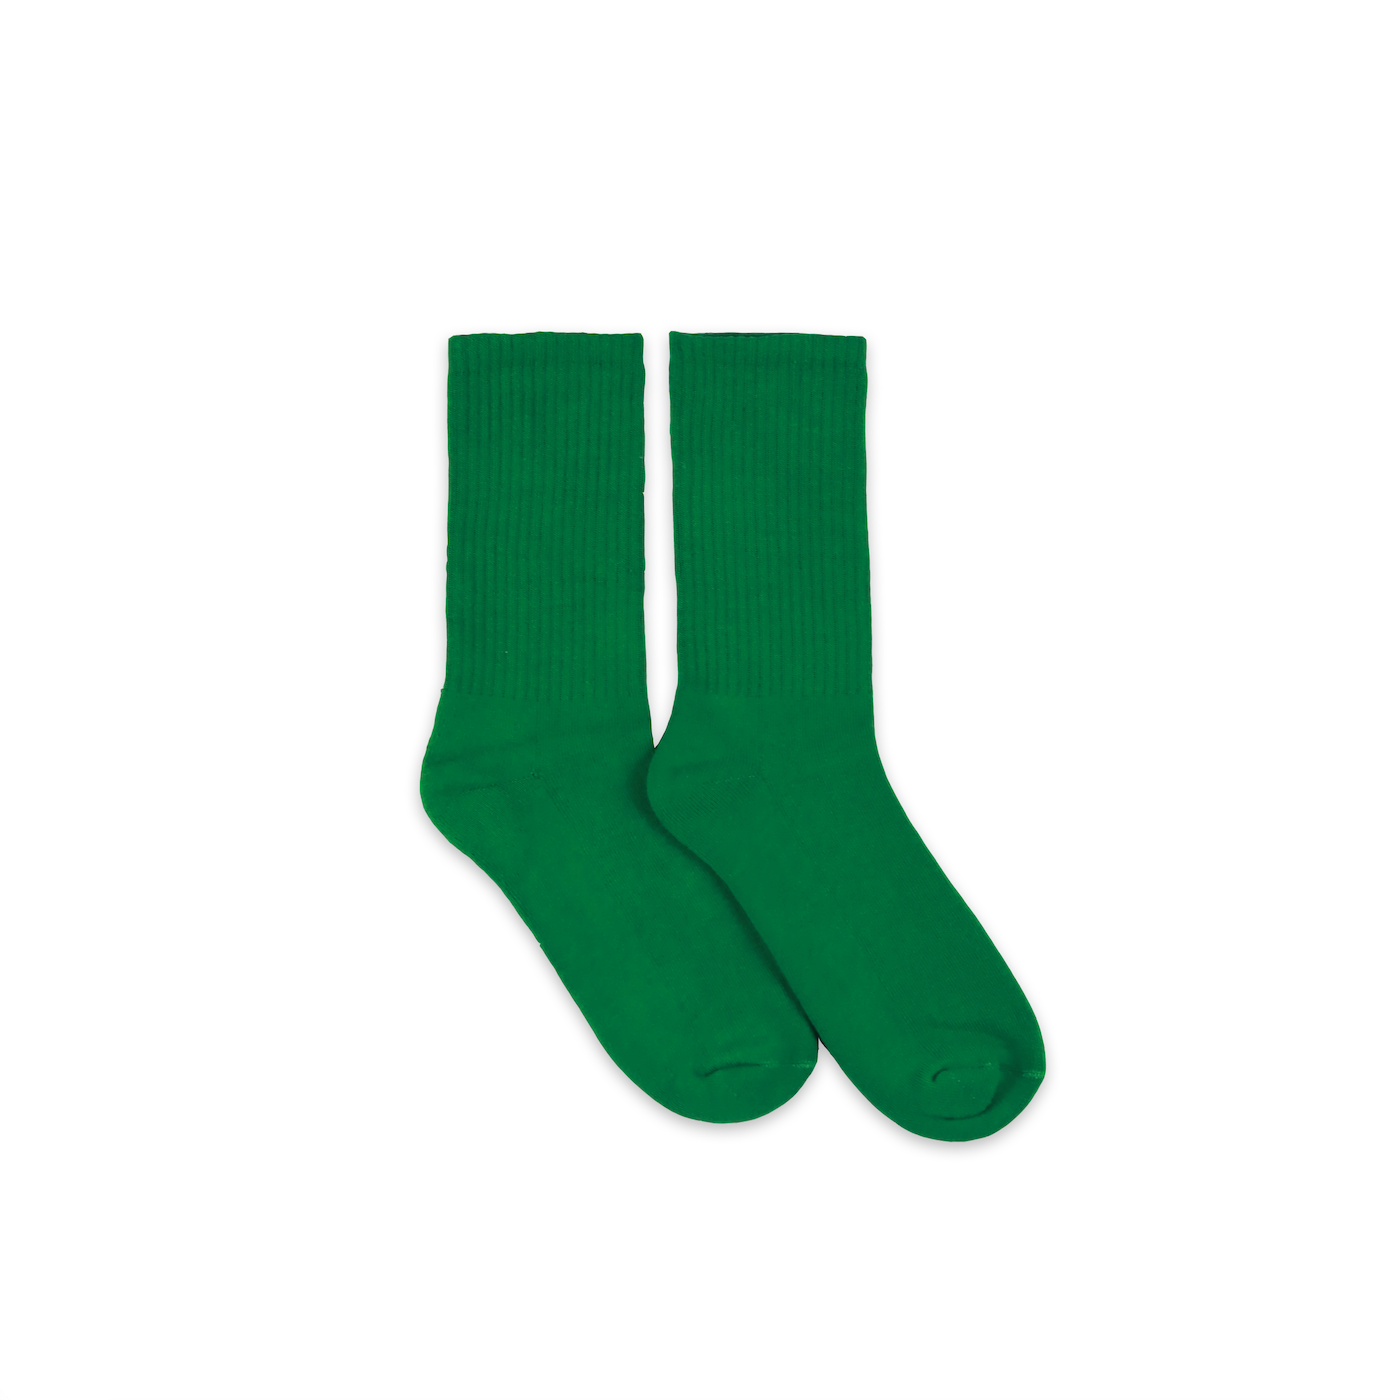 Kelly Green Socks